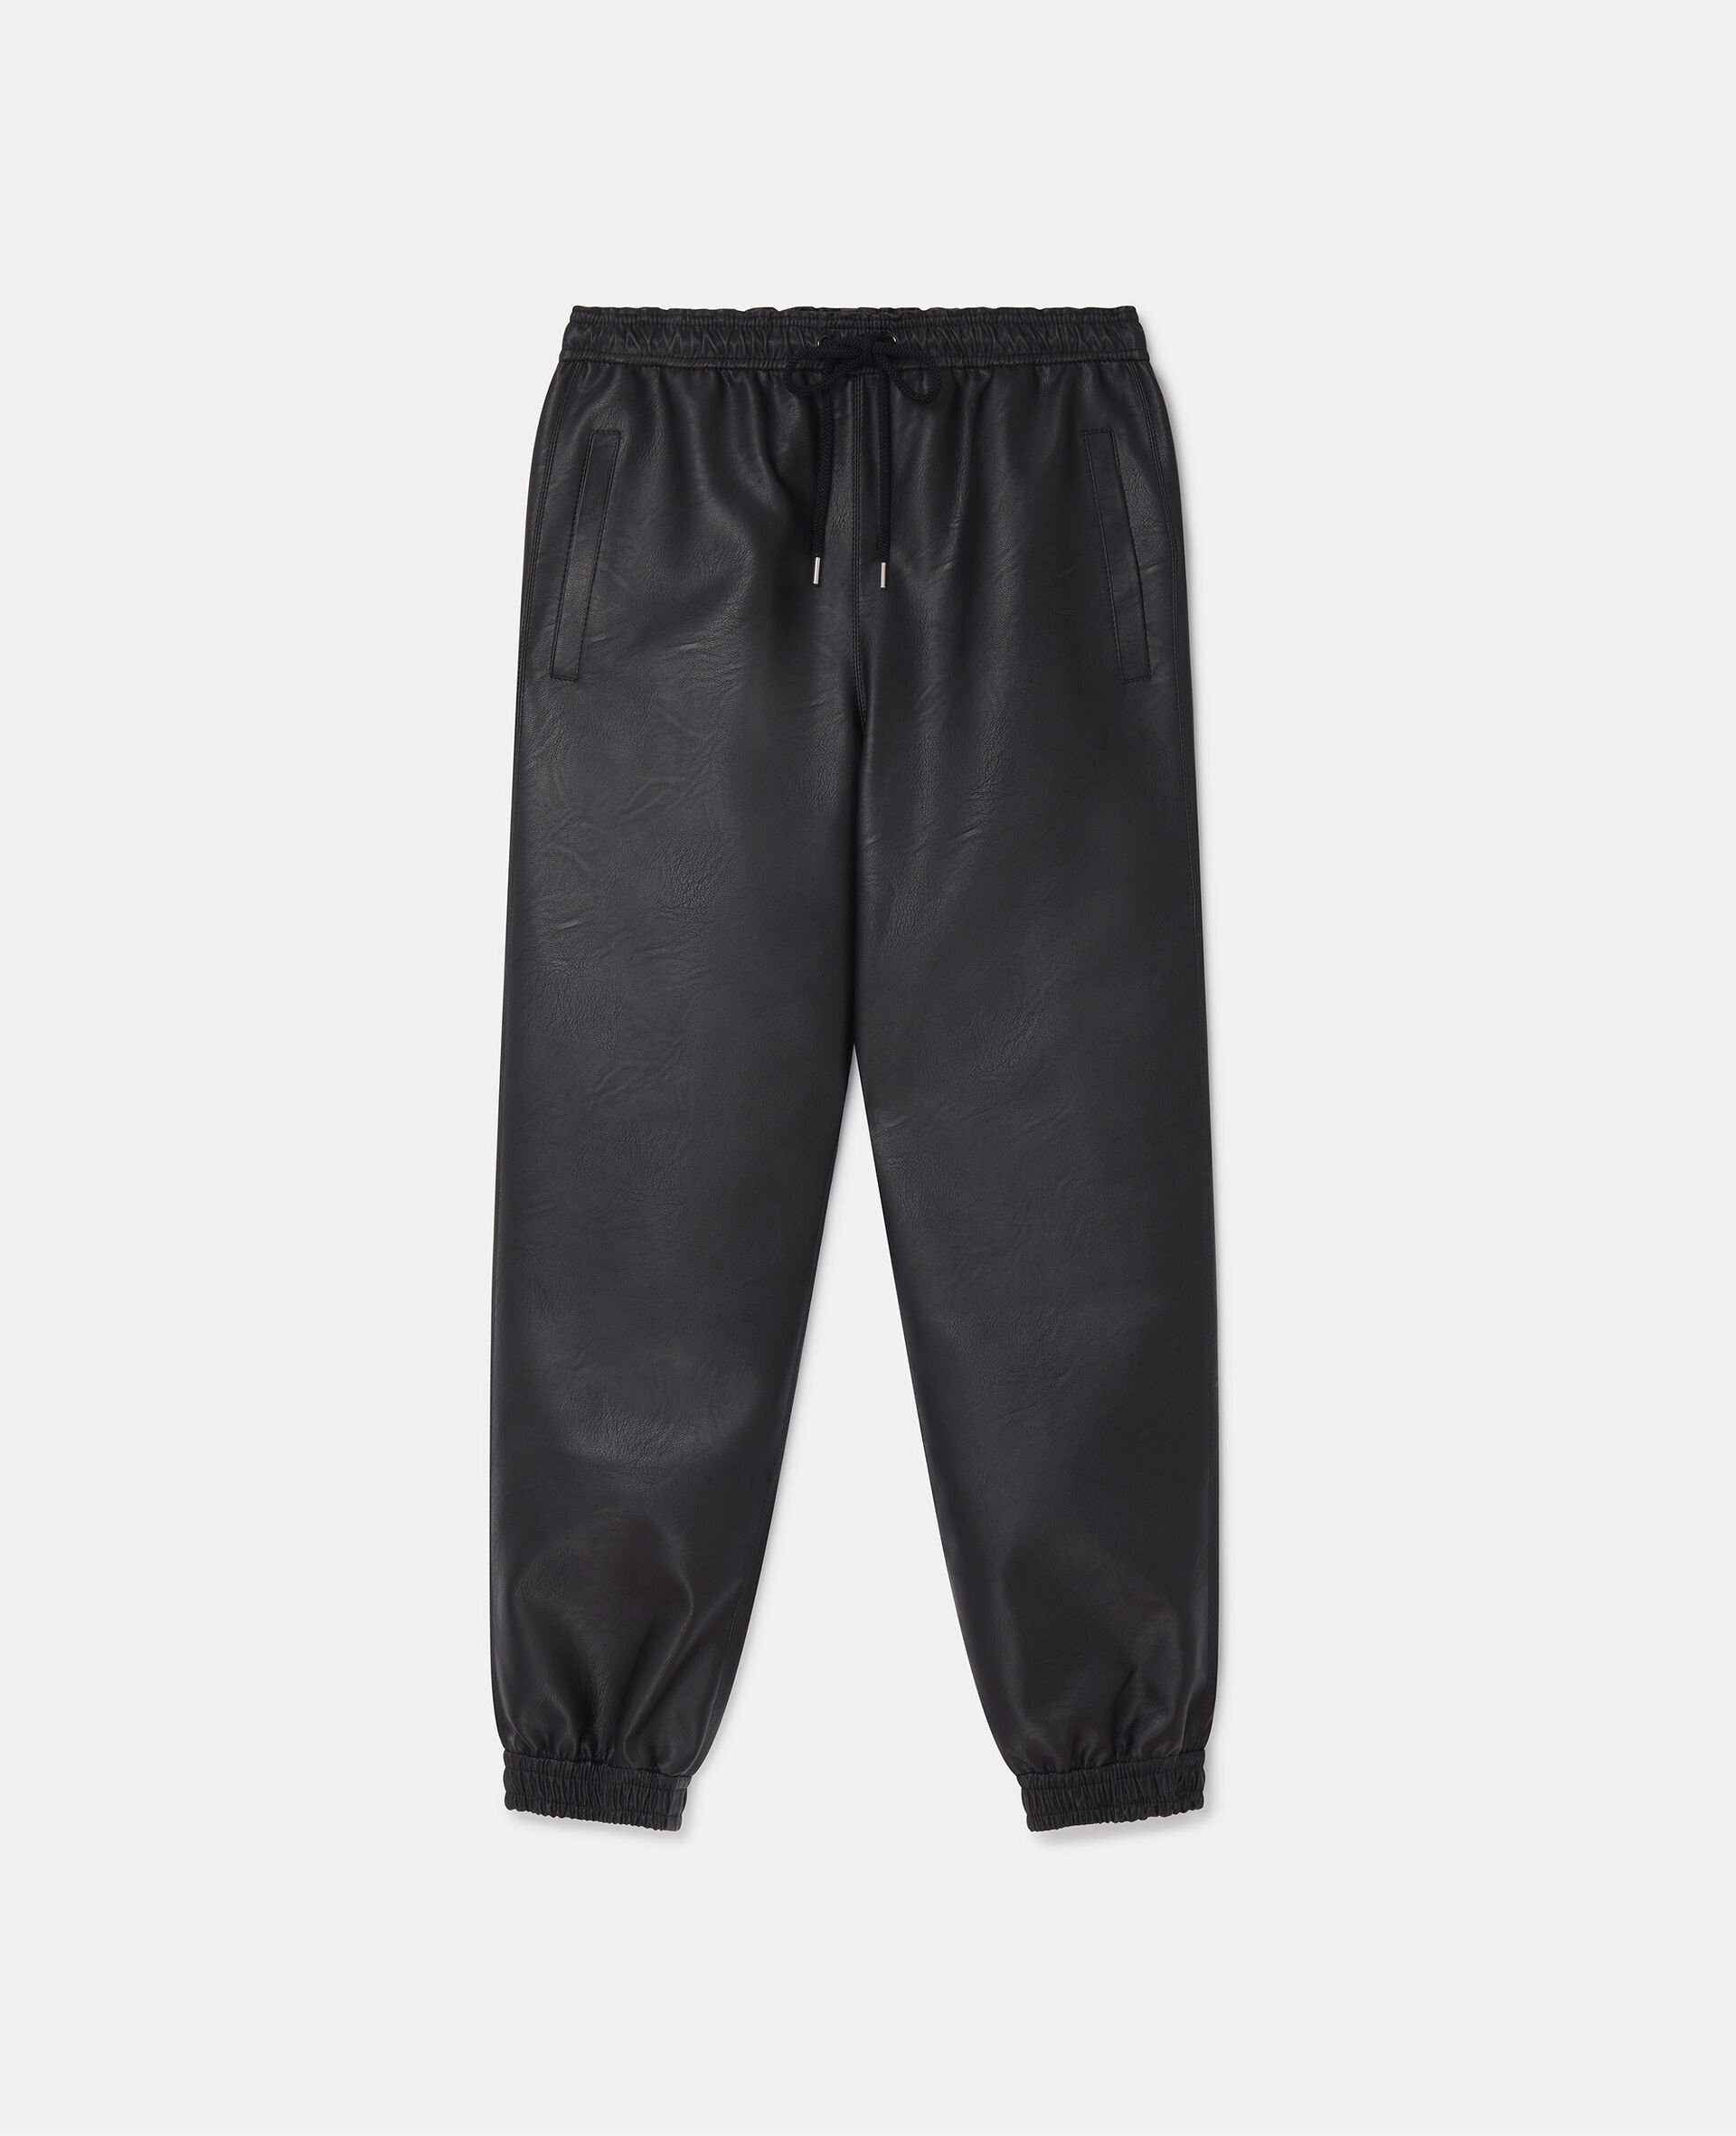 Alter Mat Trousers-Black-model